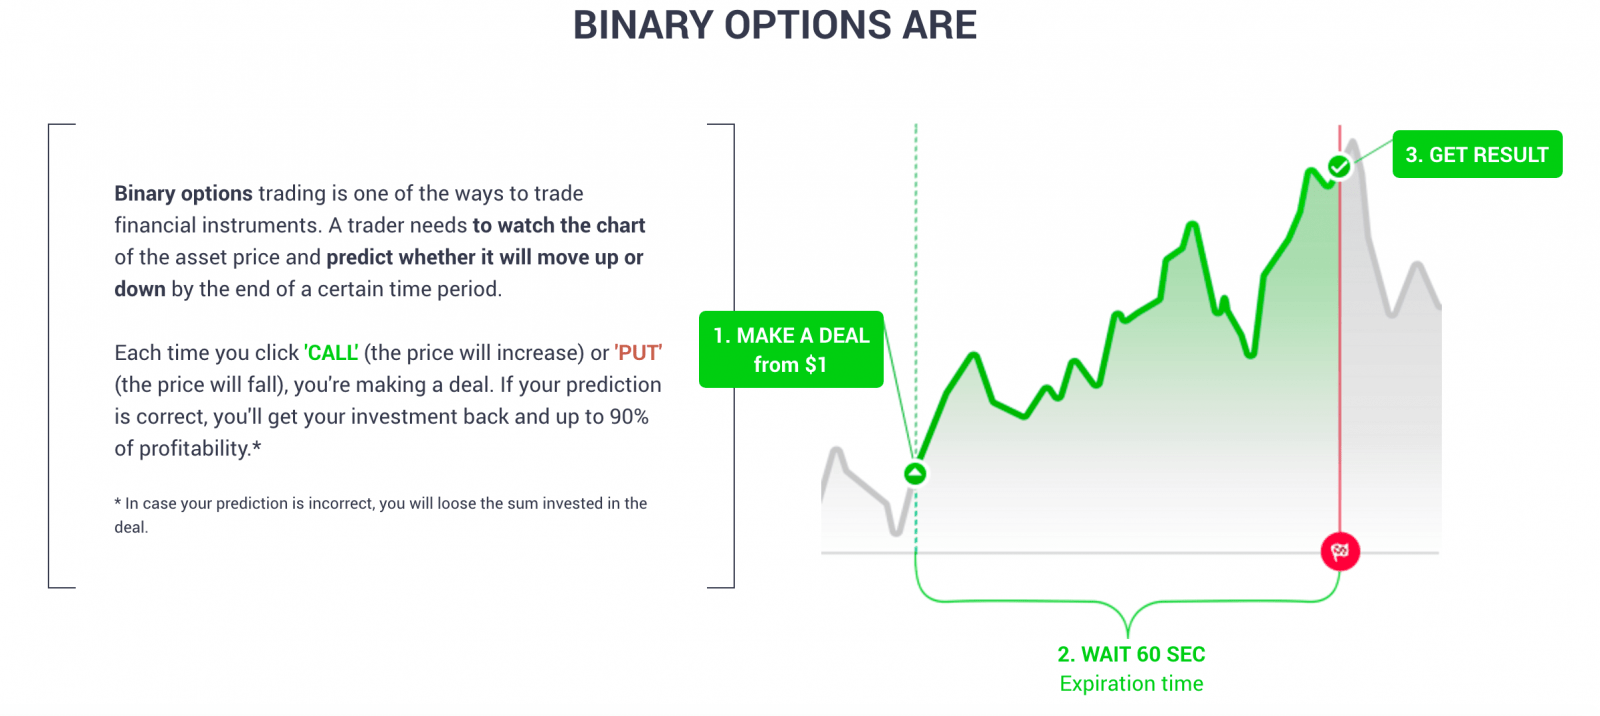 How to trade binary options like a pro